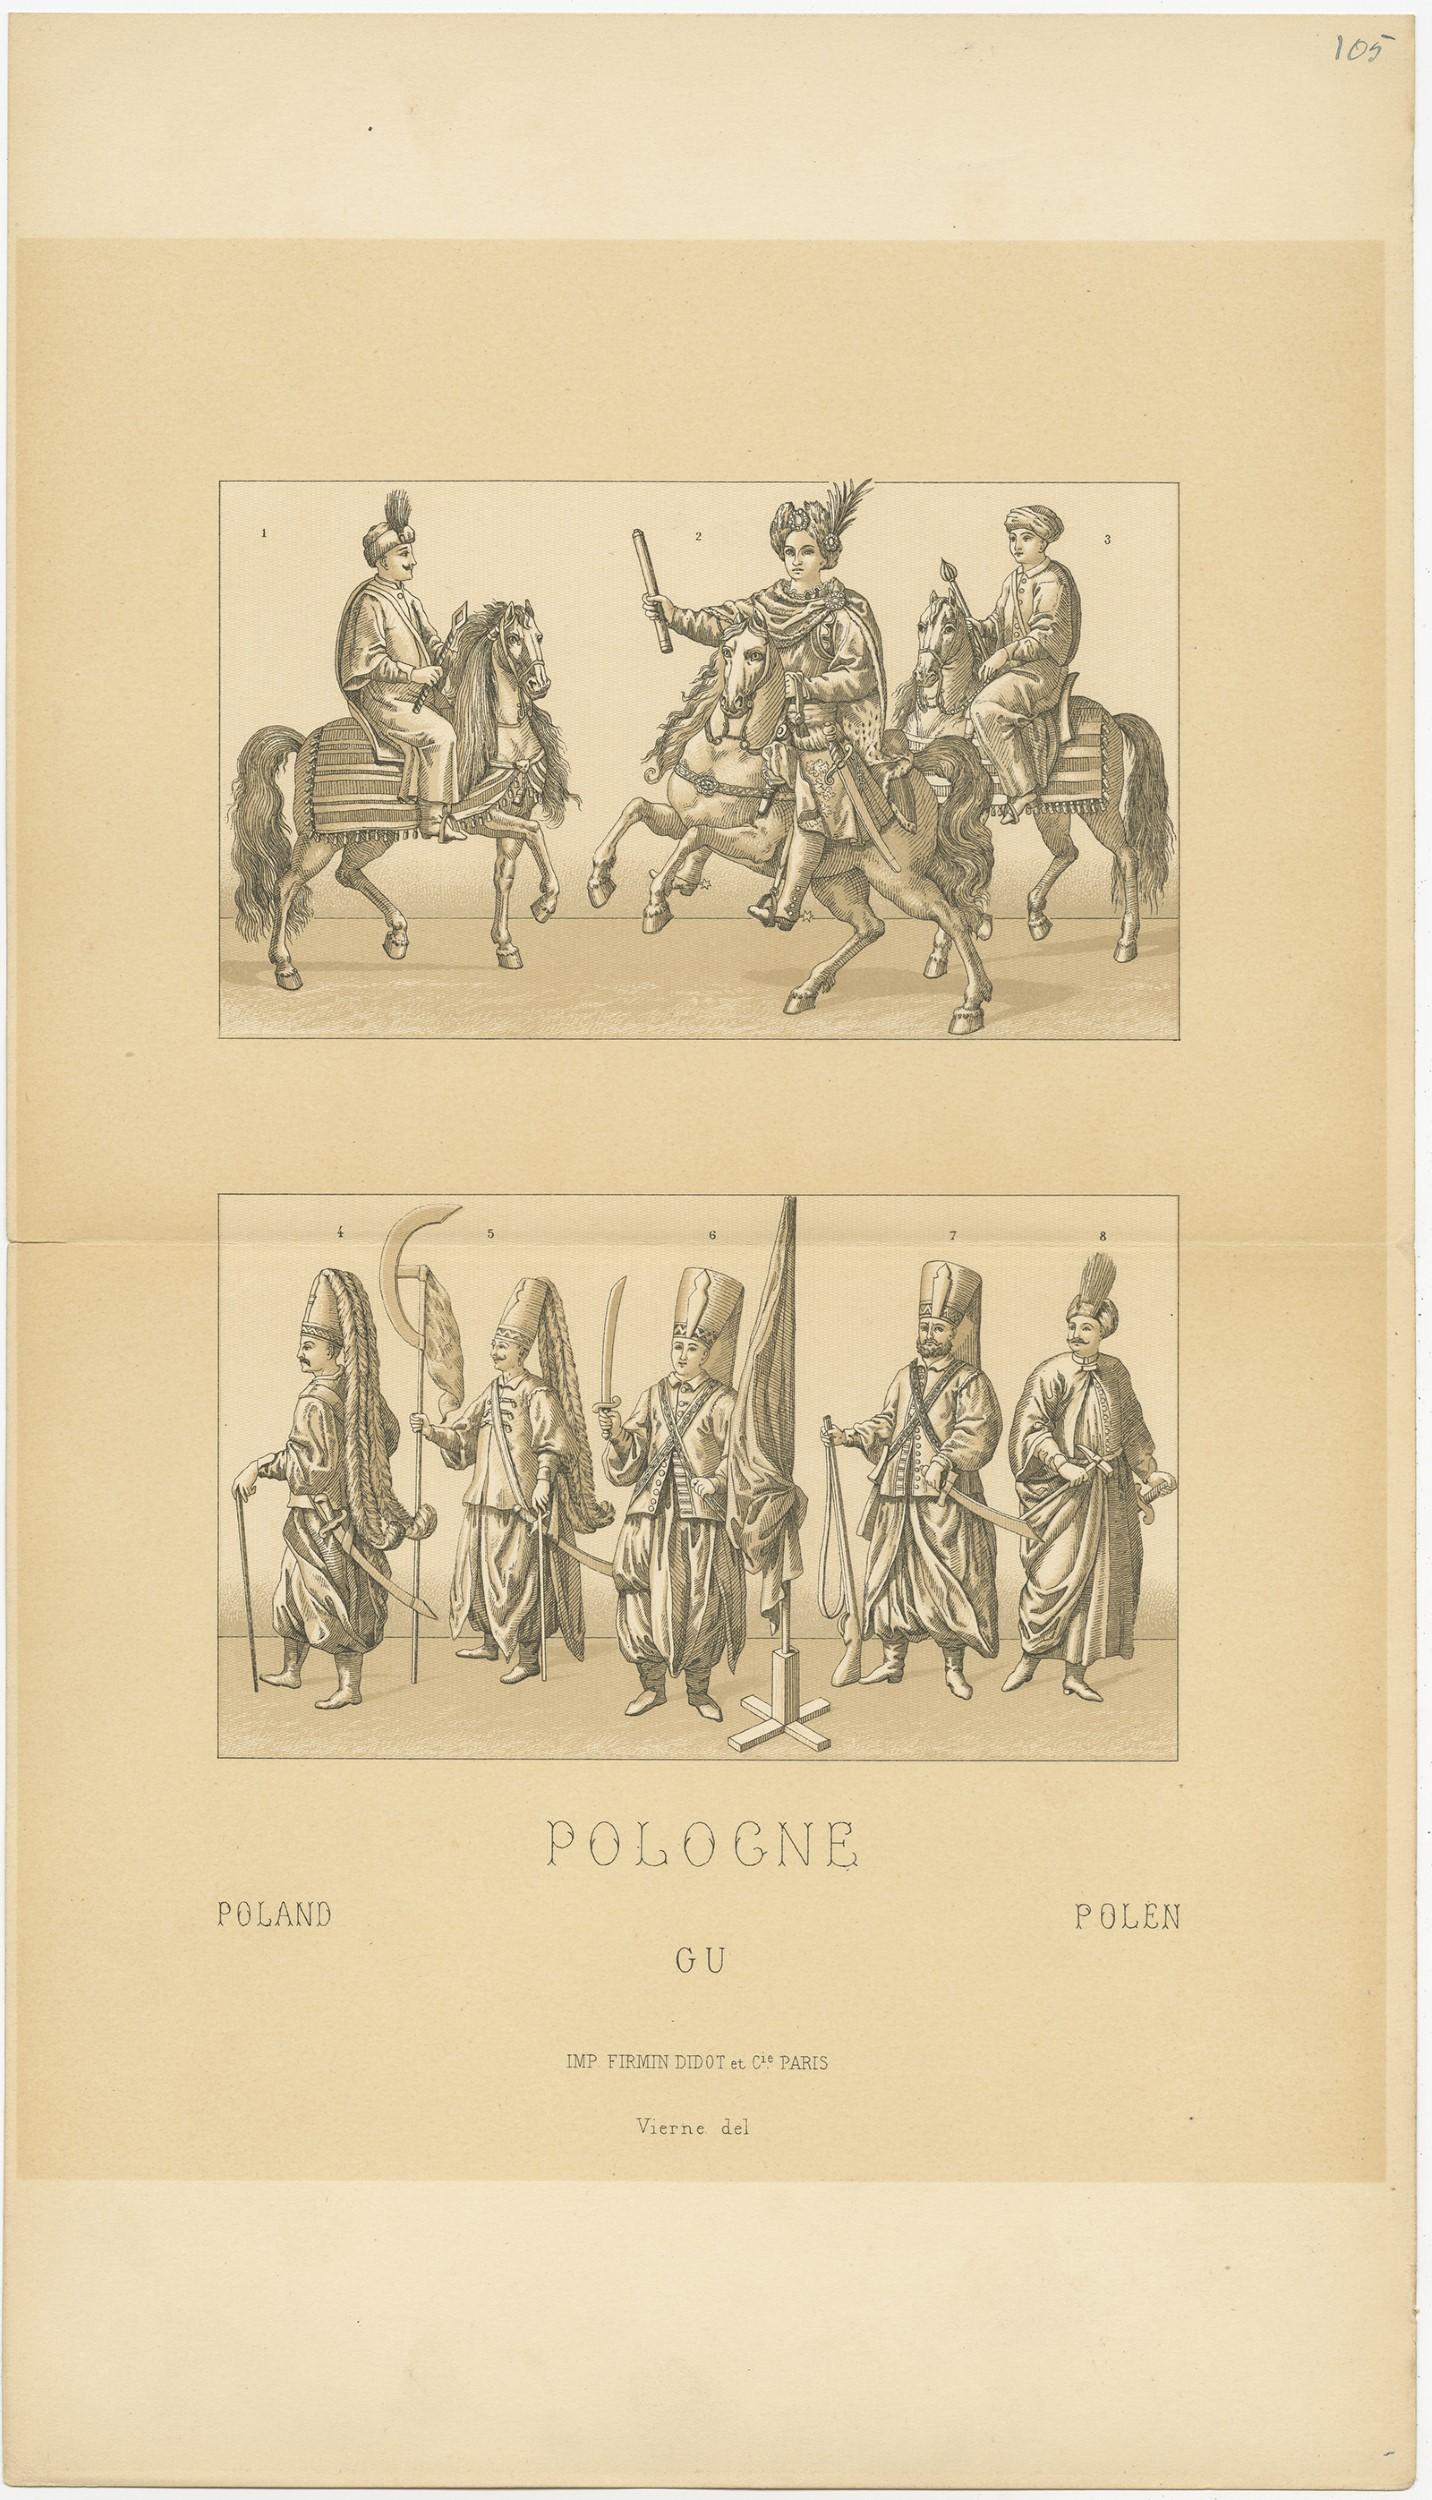 Antique print titled 'Poland - Pologne - Polen'. Chromolithograph of Polish Battle Costumes. This print originates from 'Le Costume Historique' by M.A. Racinet. Published, circa 1880.